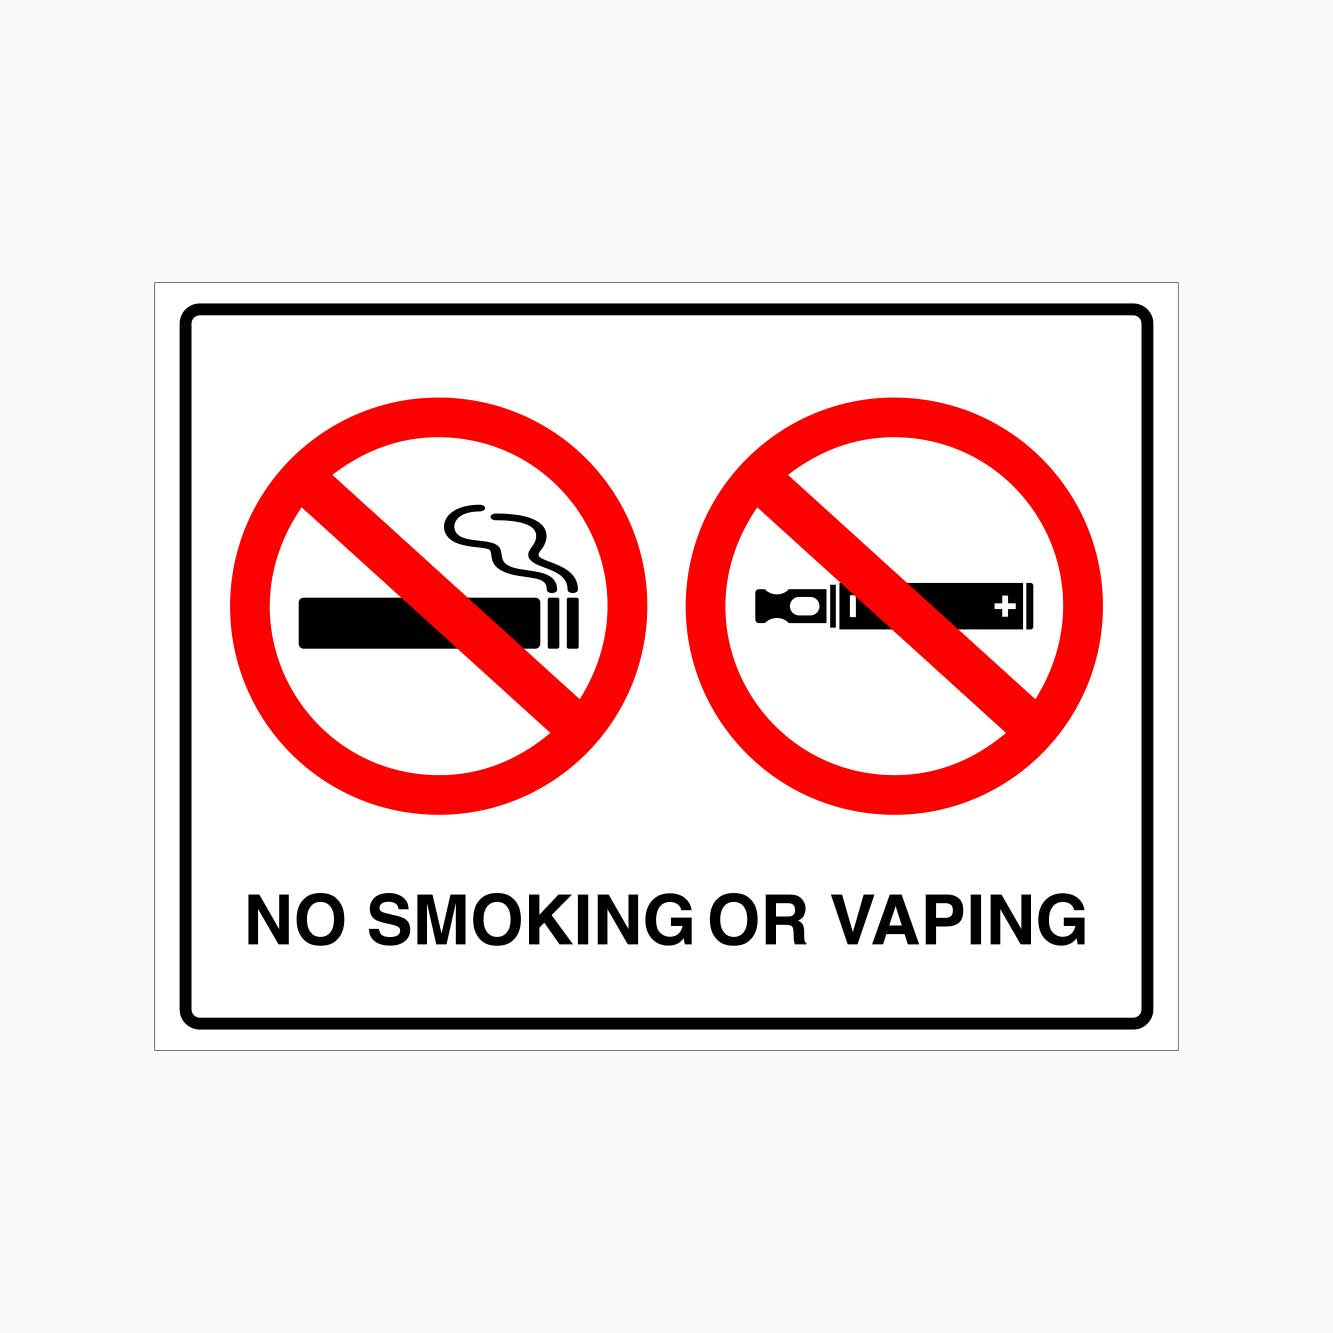 NO SMOKING OR VAPING SIGN - GET SIGNS - AUSTRALIA